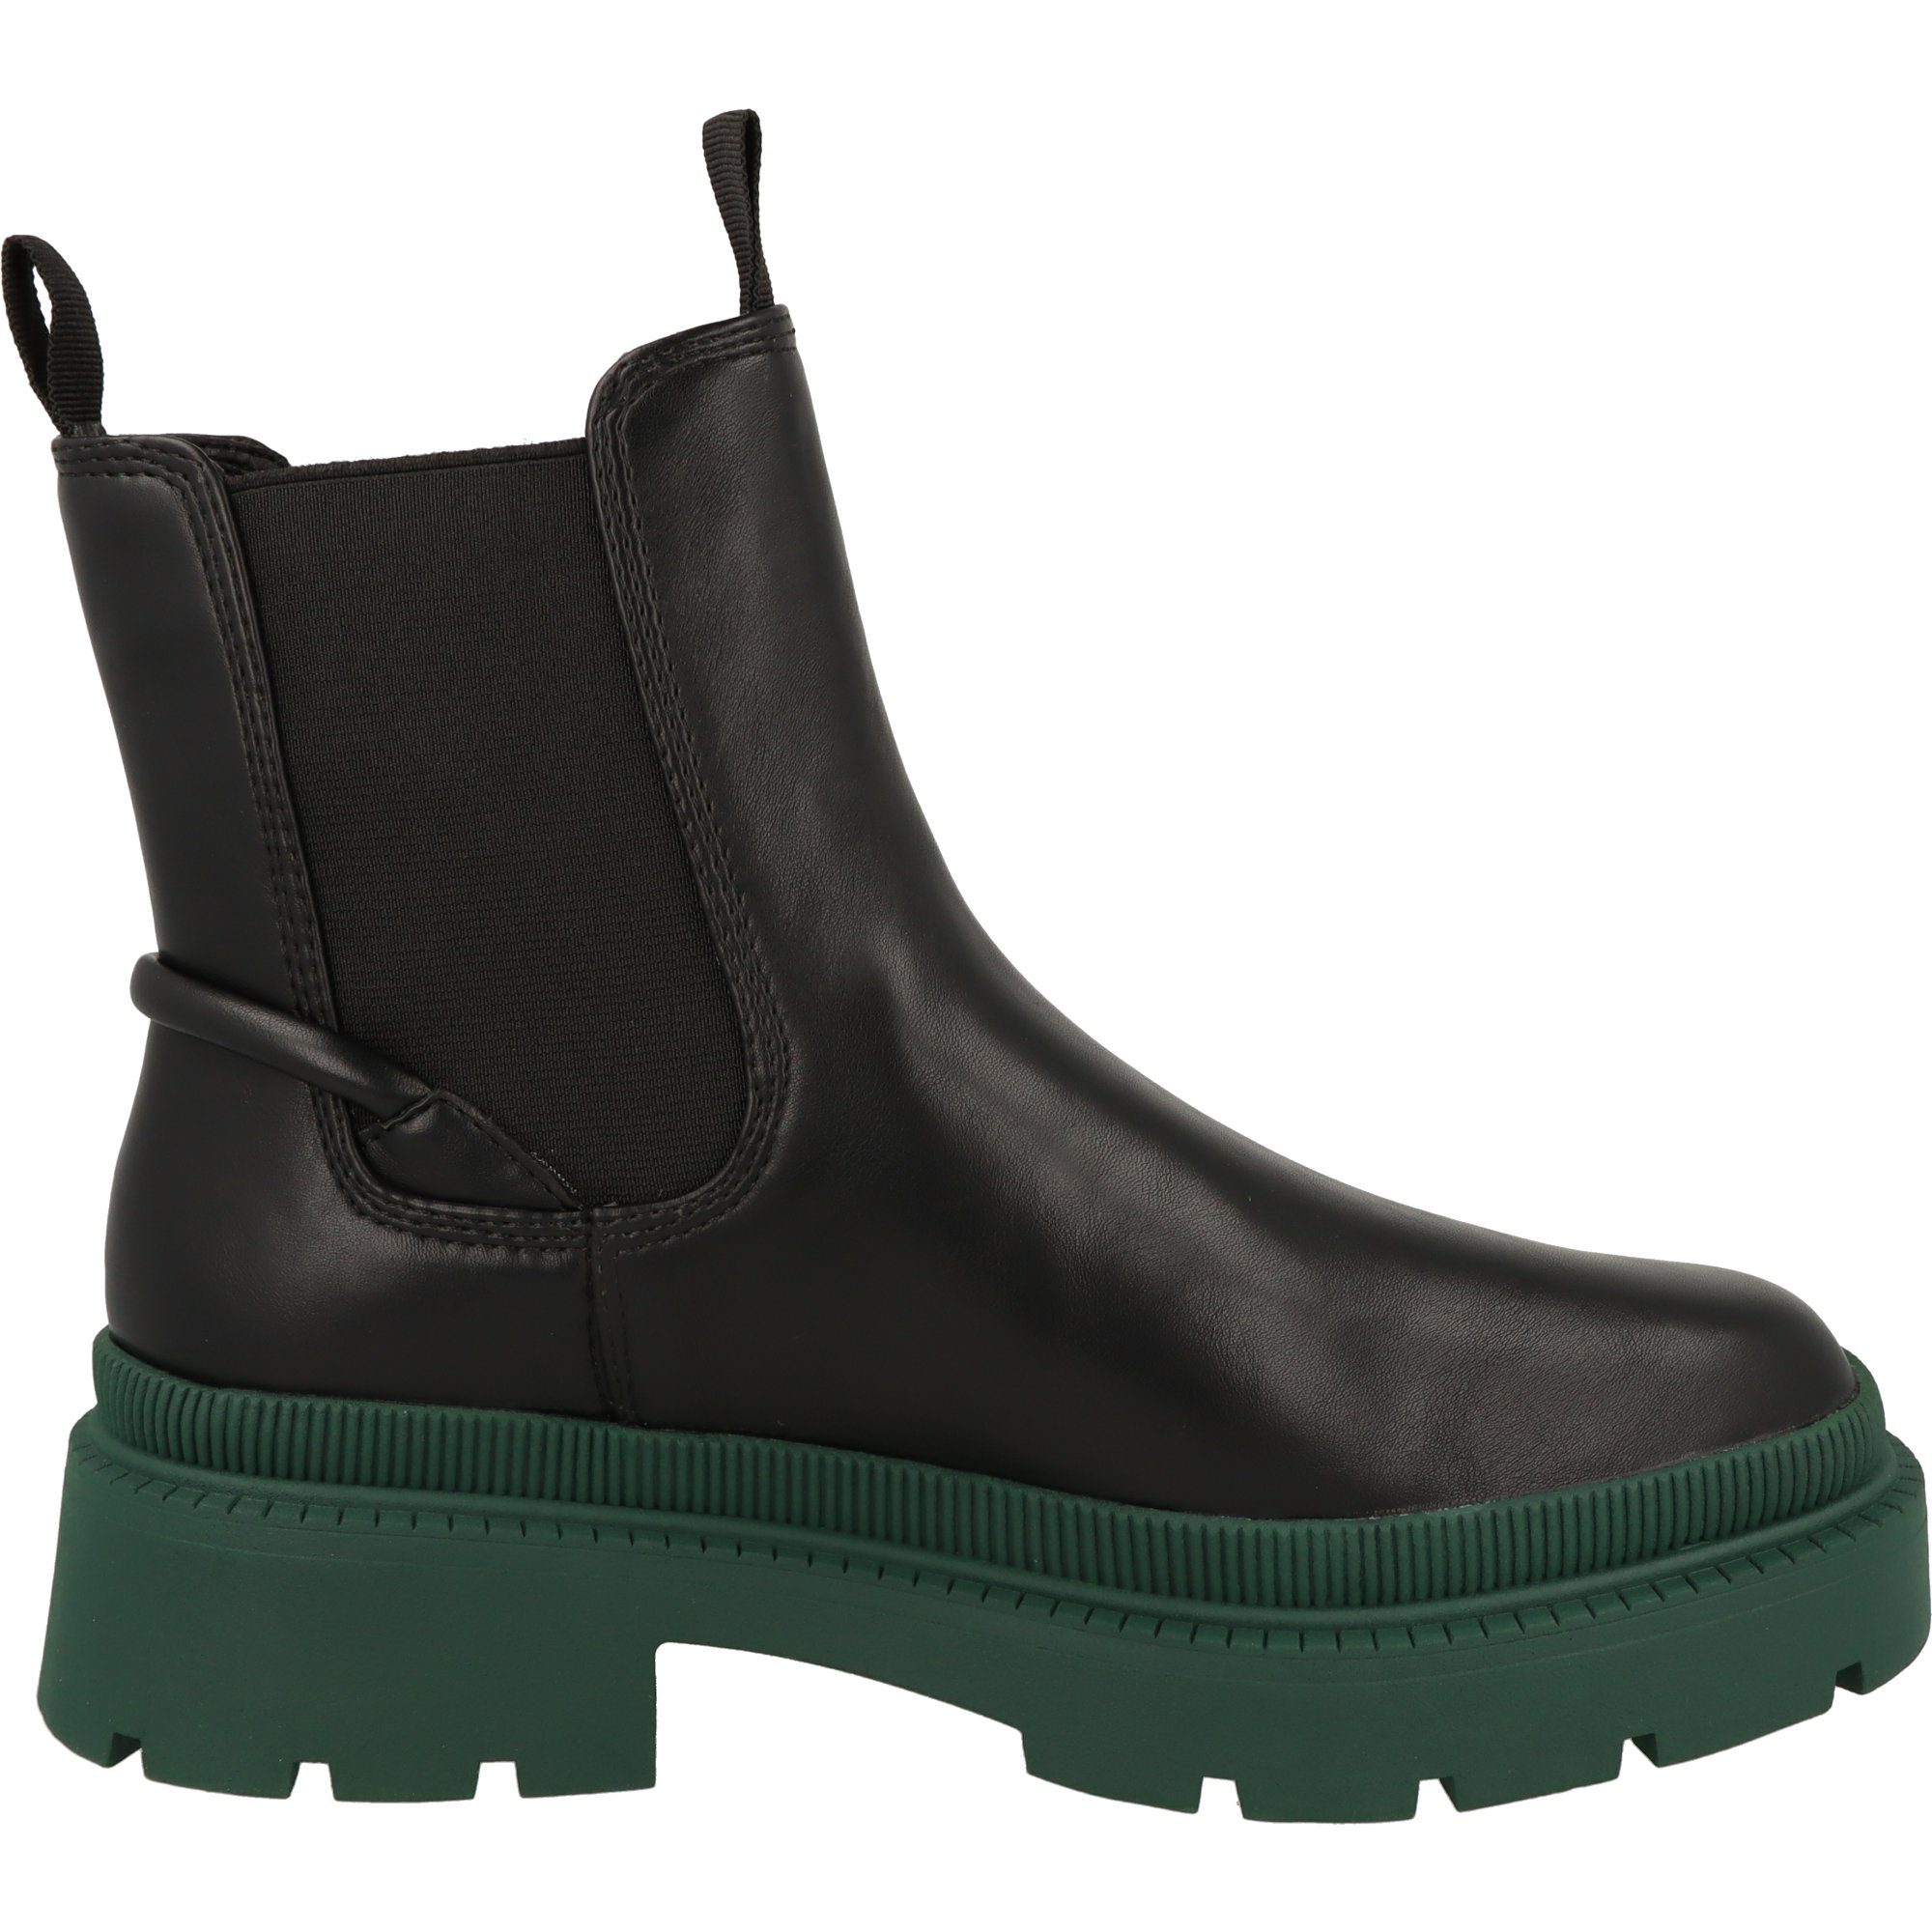 Damen Schuhe stylische Chelseaboots BLACK/DK.GREEN Tamaris (21203619) Black/Green Boots 1-25405-29 Chelsea